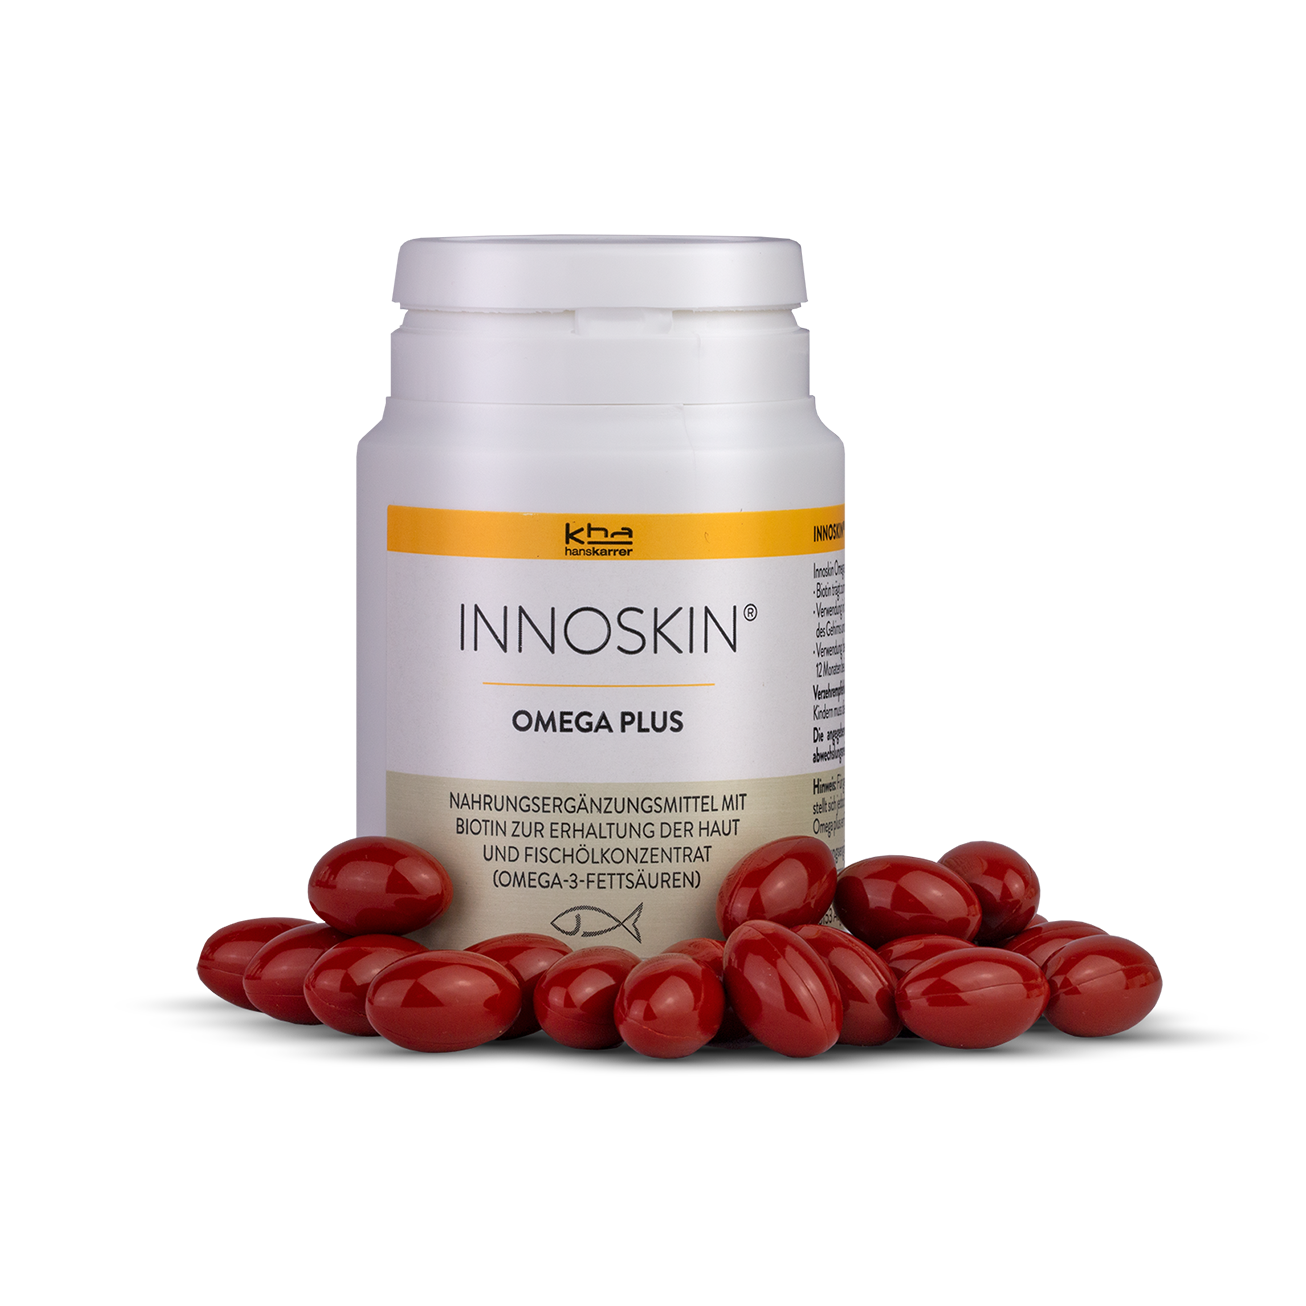 Innoskin® Omega plus